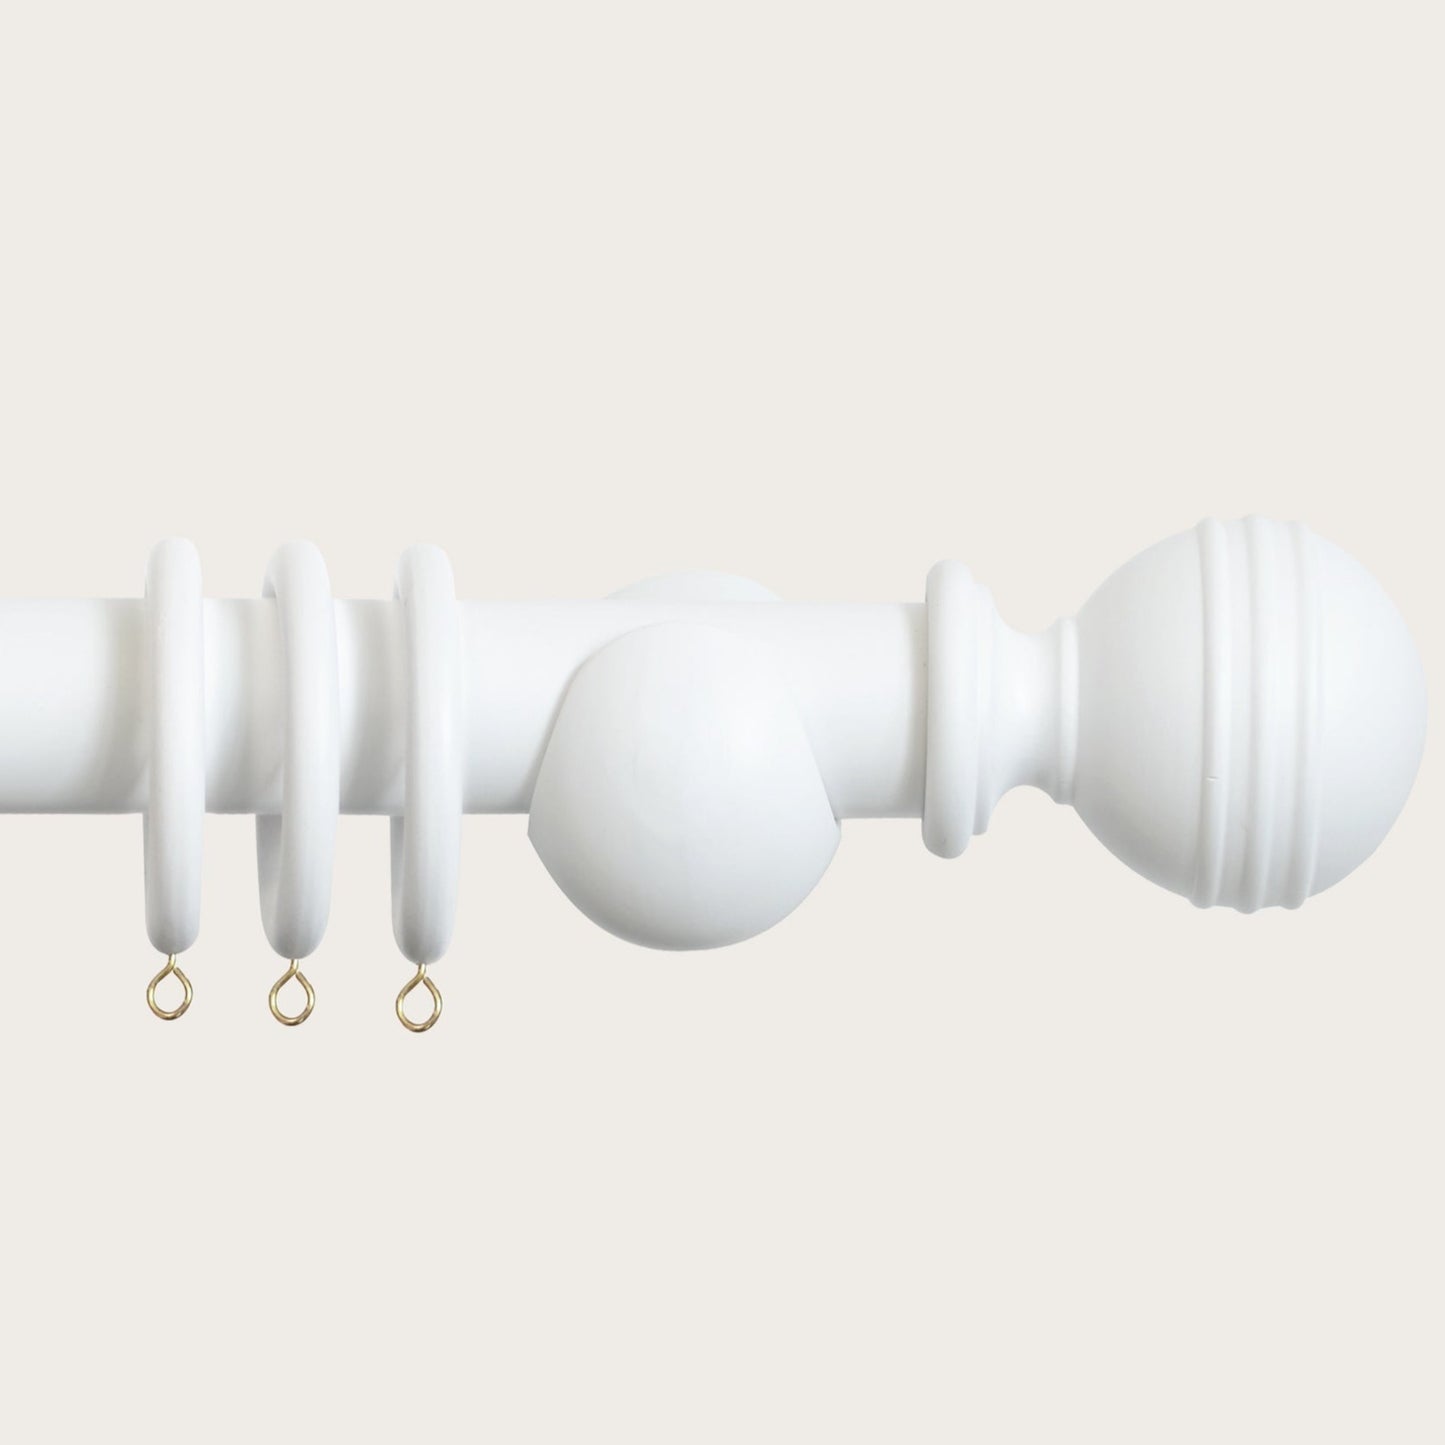 35mm Ribbed Ball Pole Set - Cotton White